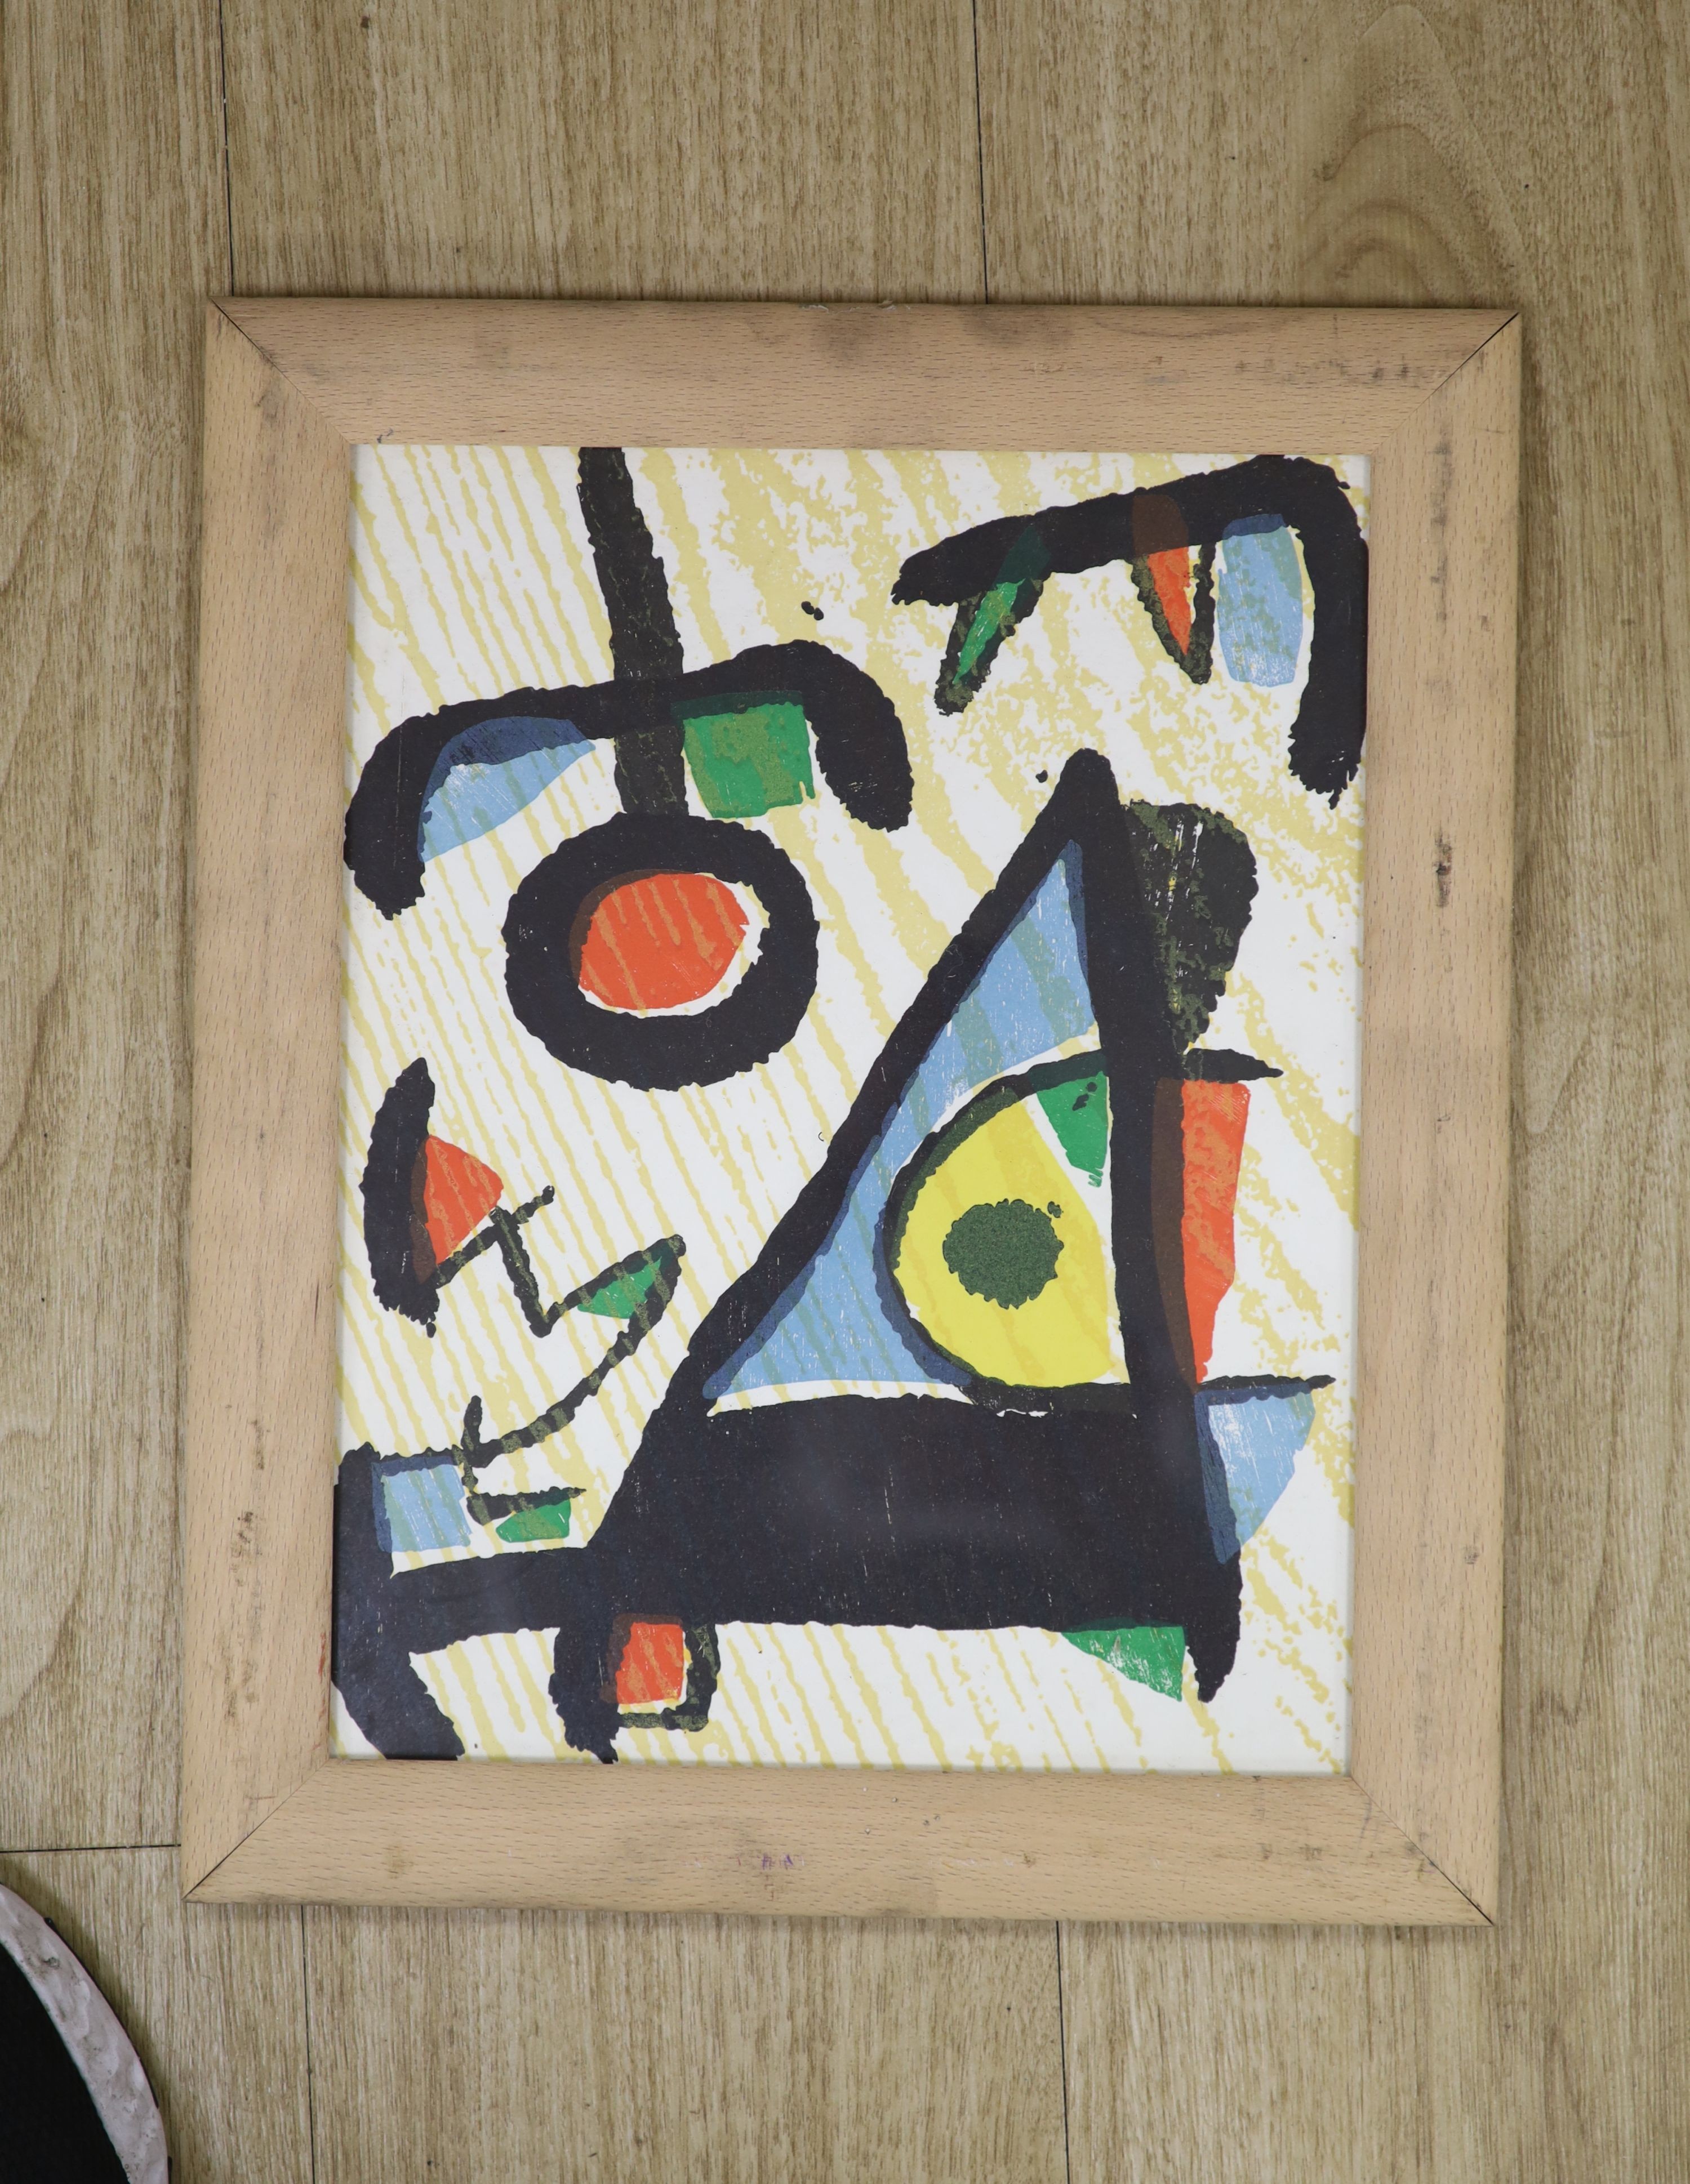 Joan Miro (1893-1983), woodcut, Untitled, 31 x 24cm